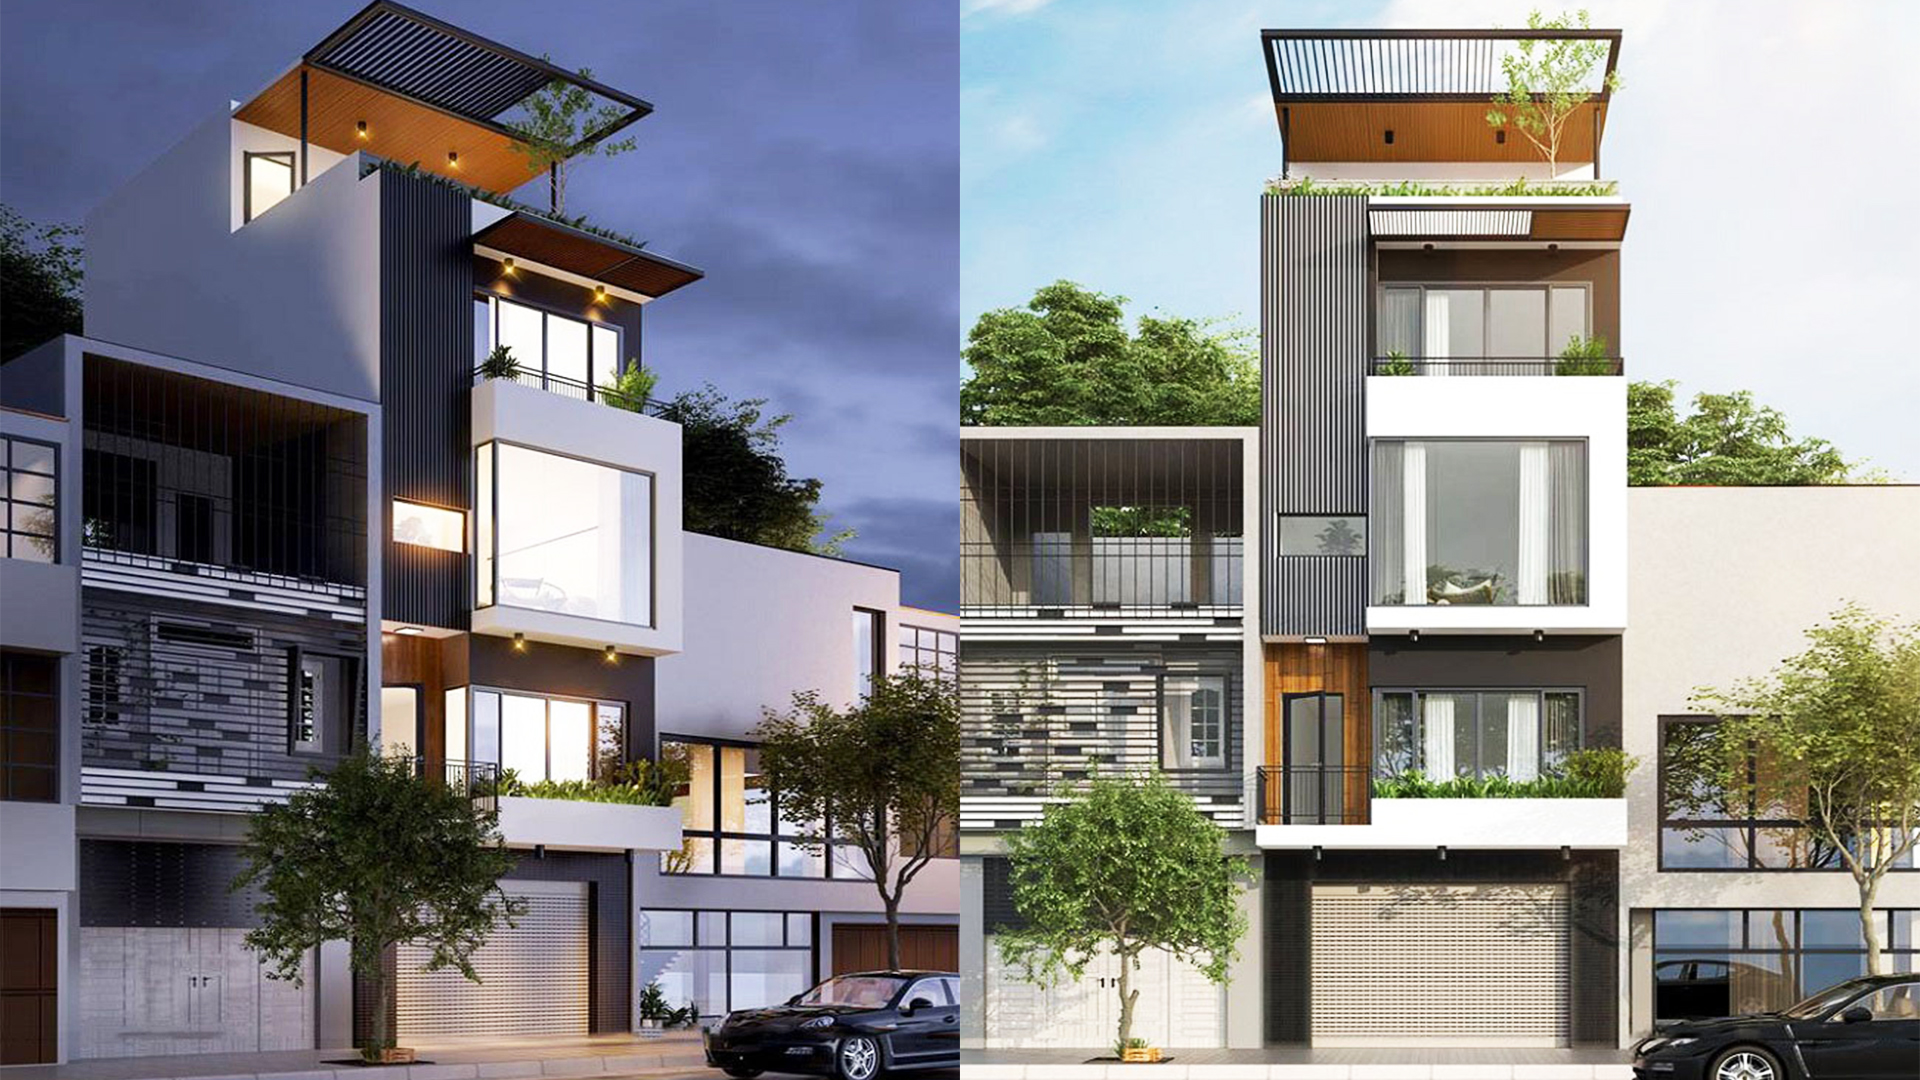 Narrow Lot House Plans 5x9.5m with 4 Bedrooms - SamPhoas Plan